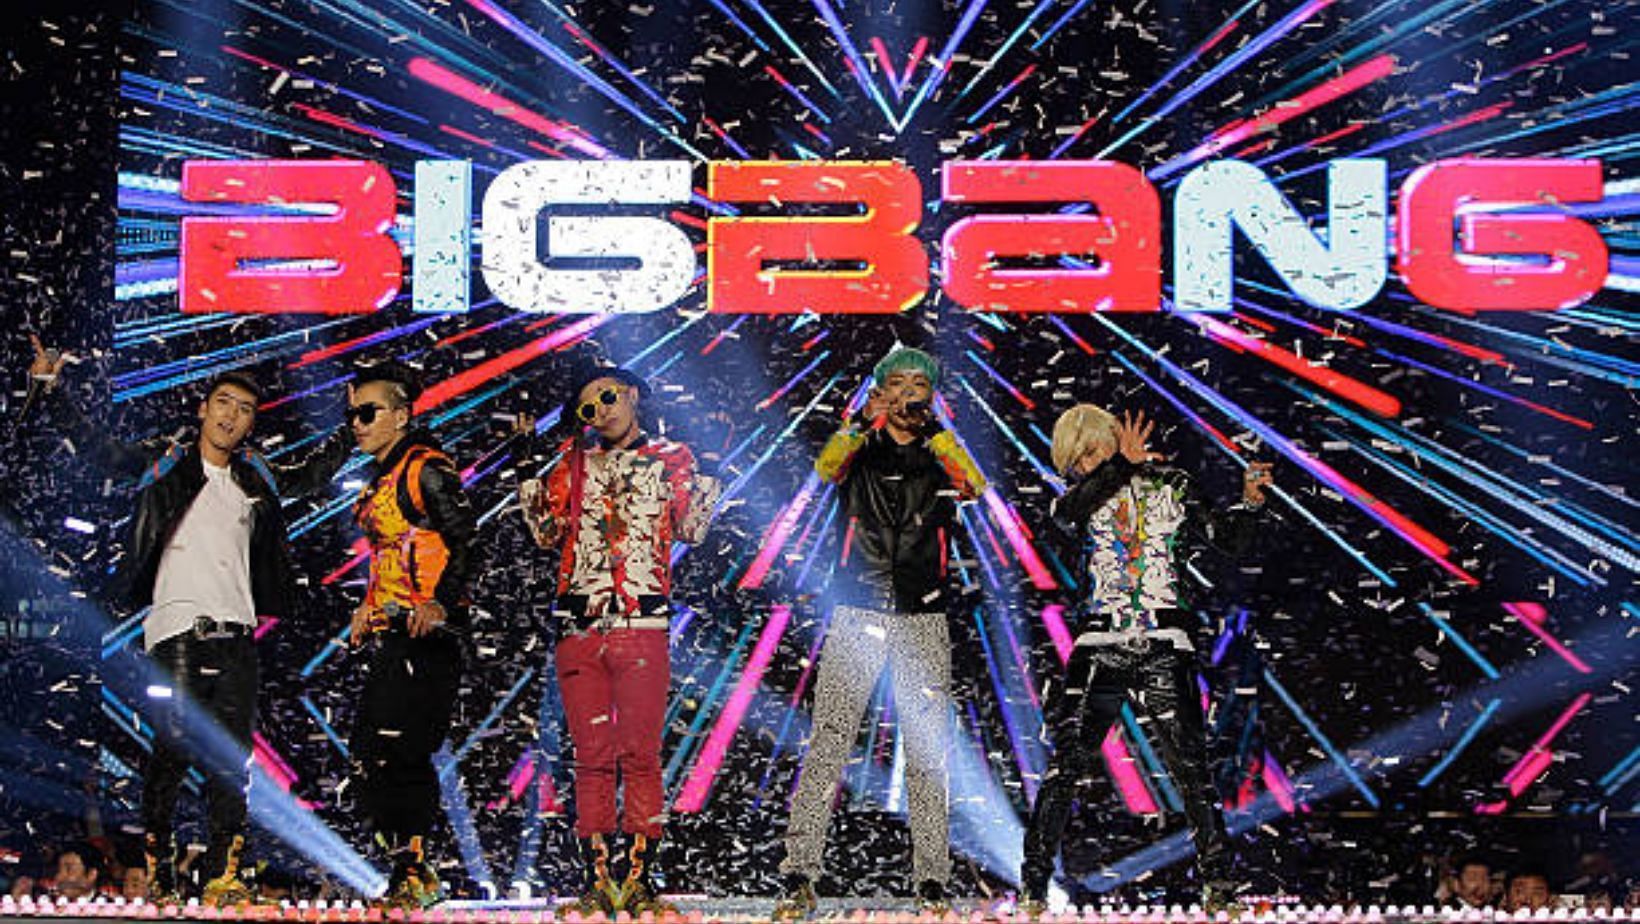 MADE Tour by BIGBANG. (Image via GETTY/Chung Sung-Jun)